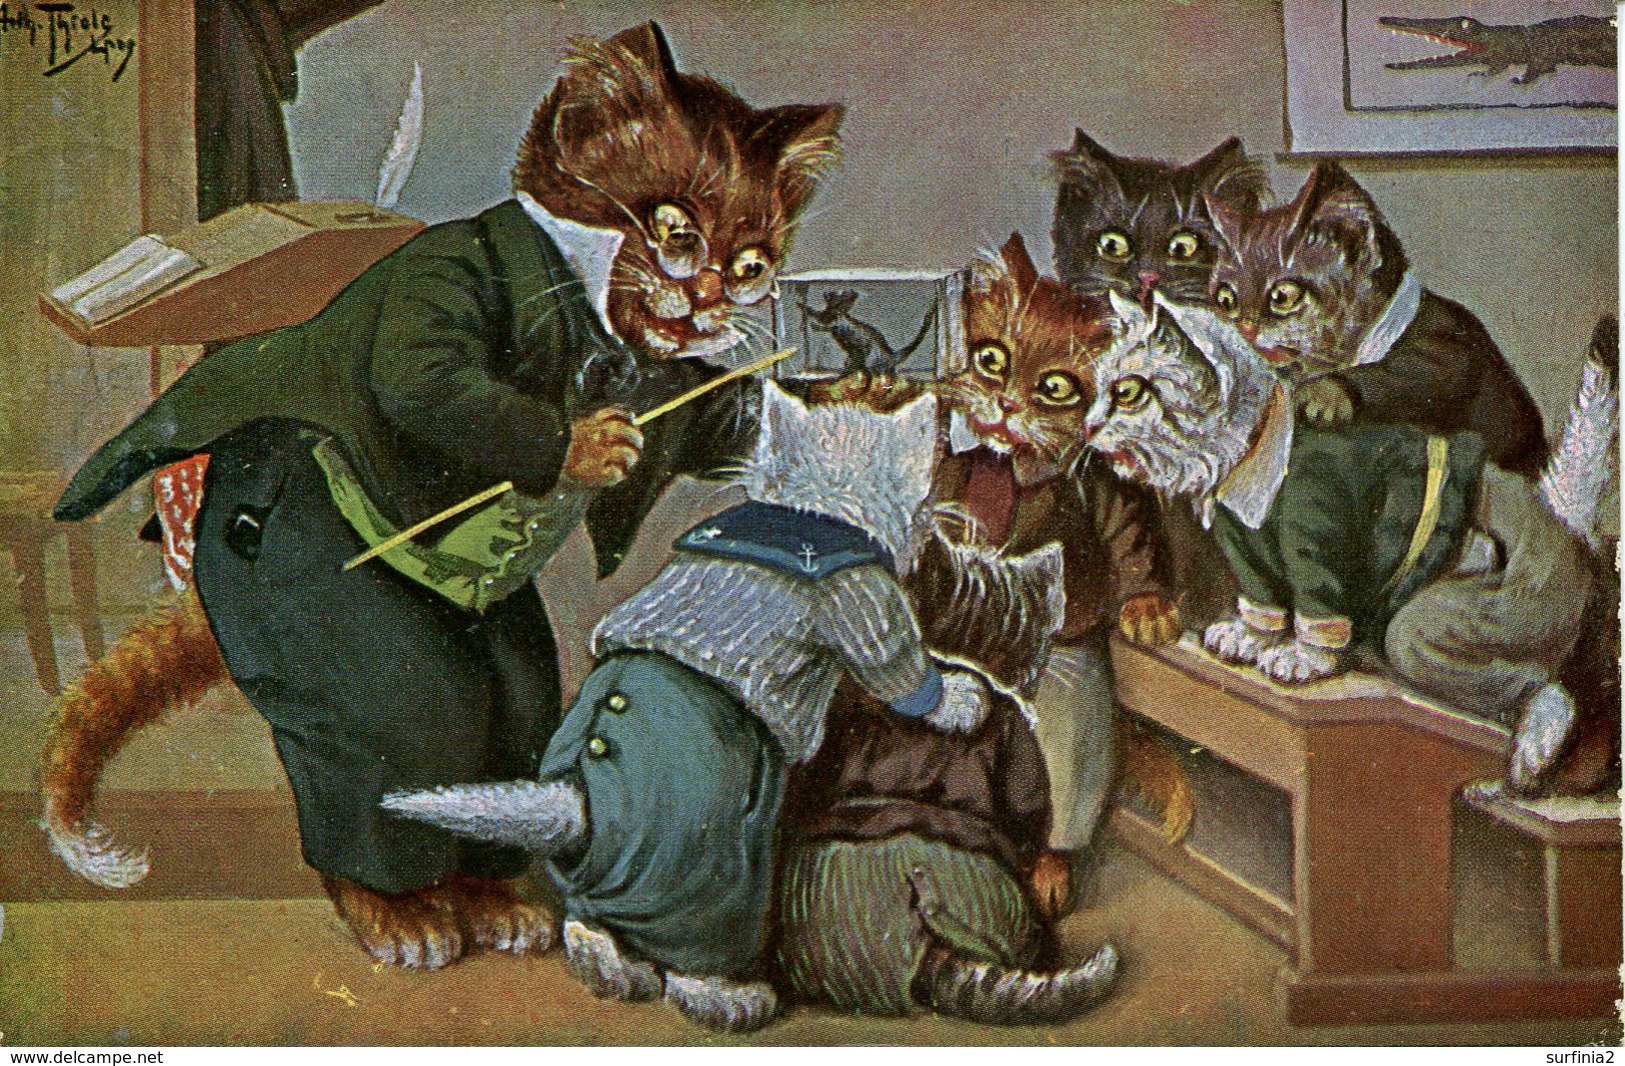 CATS - ART DRAWN BY ARTHUR THIELE - CATS IN CLASSROOM - 1934 C392 - Thiele, Arthur